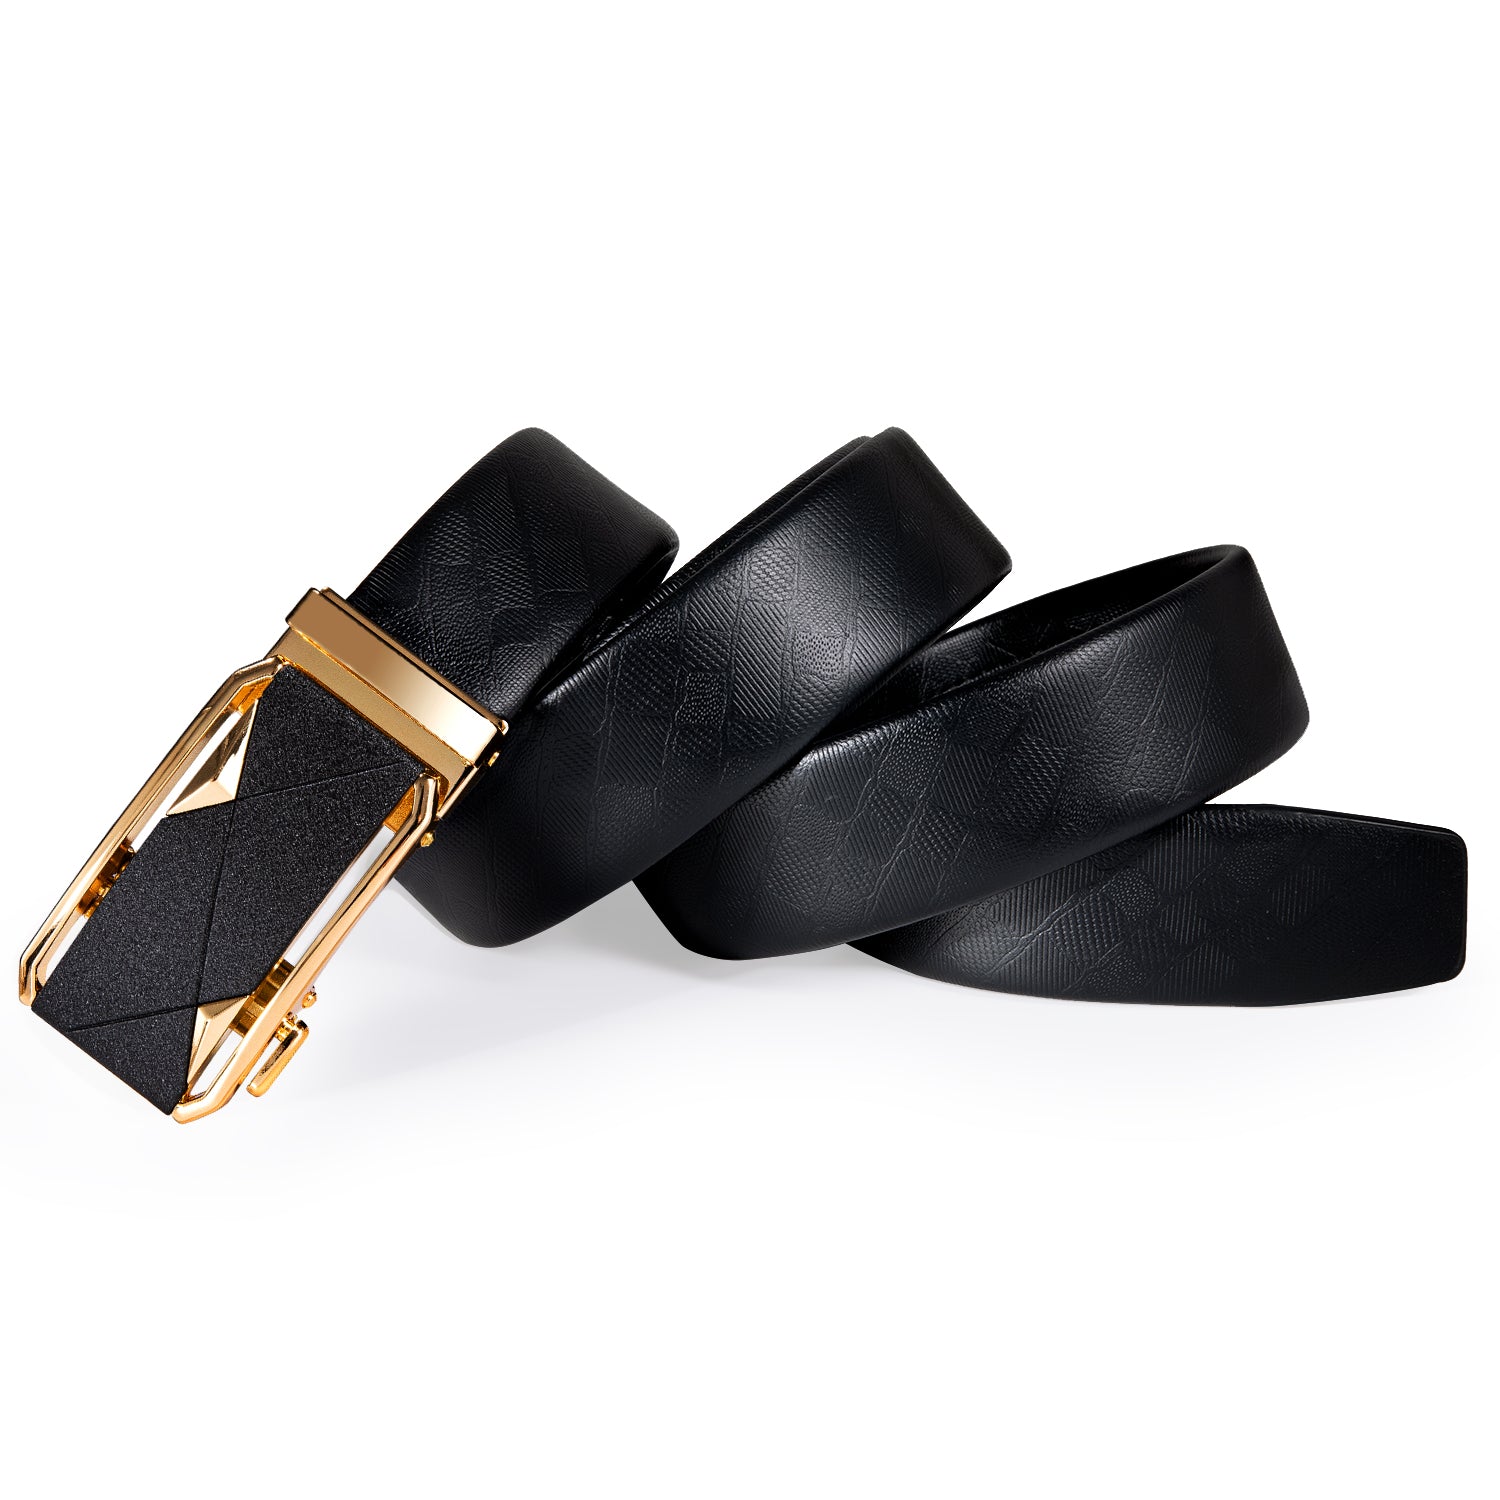 Novelty Golden Black Rectangle Metal Buckle Genuine Leather Belt 43 inch to 63 inch